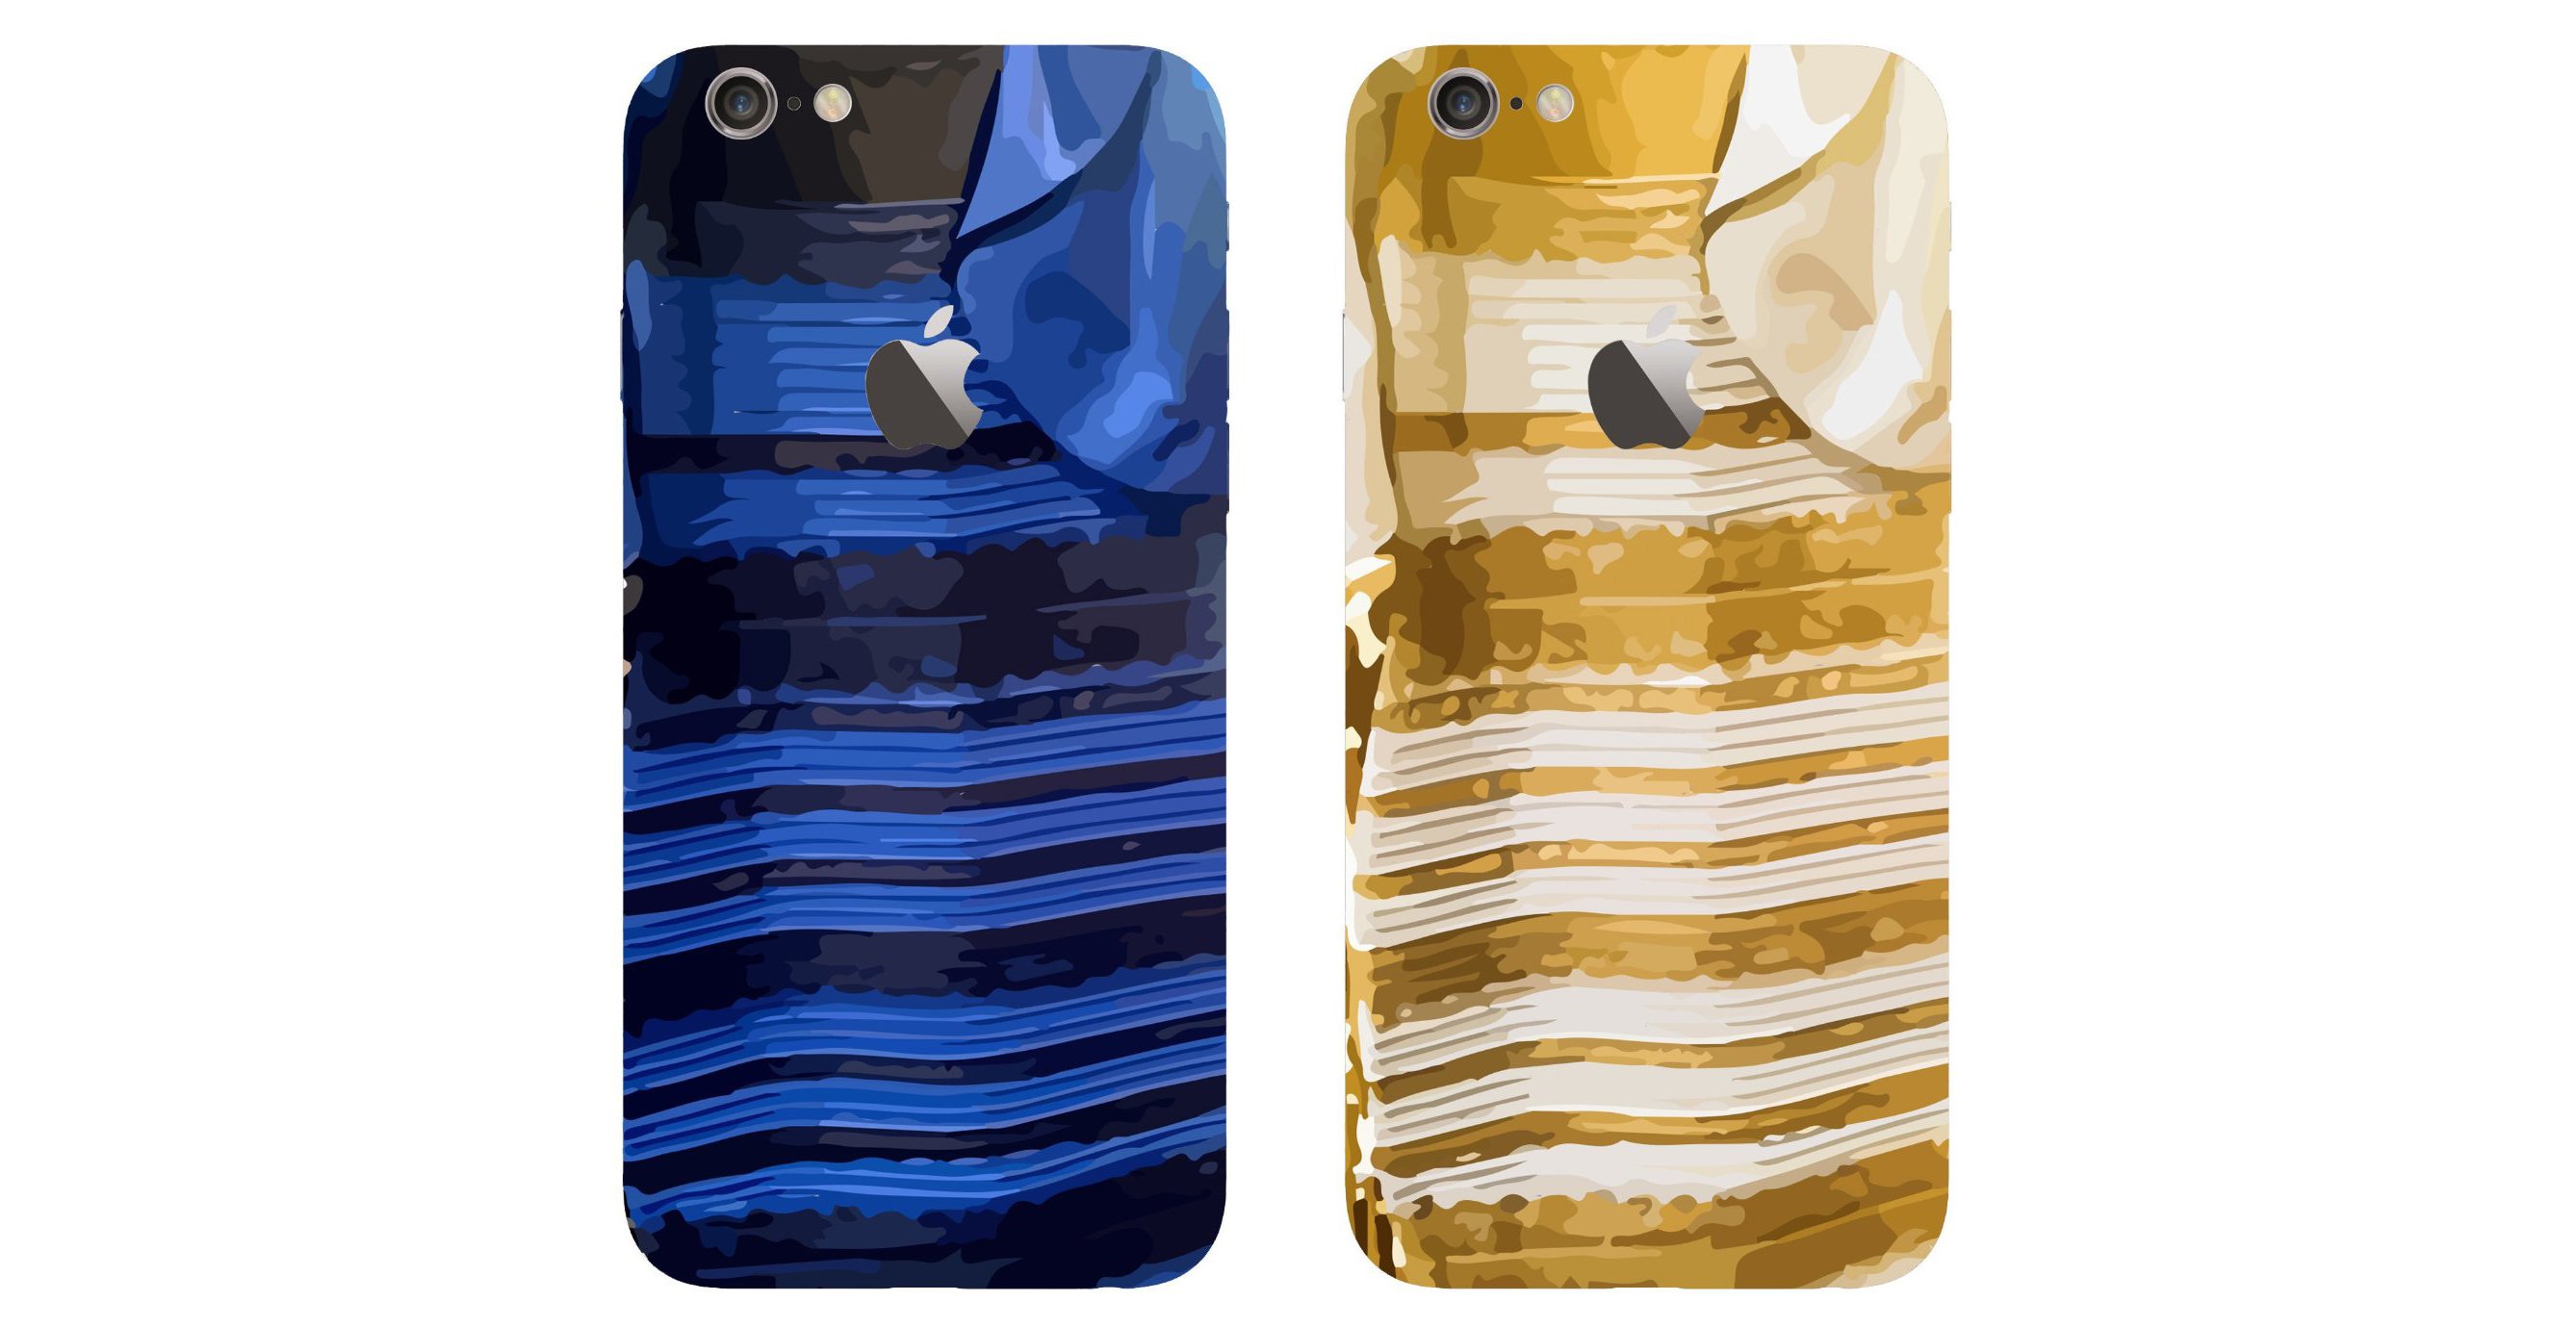 blueblack whitgold dress iphone 6 case 00